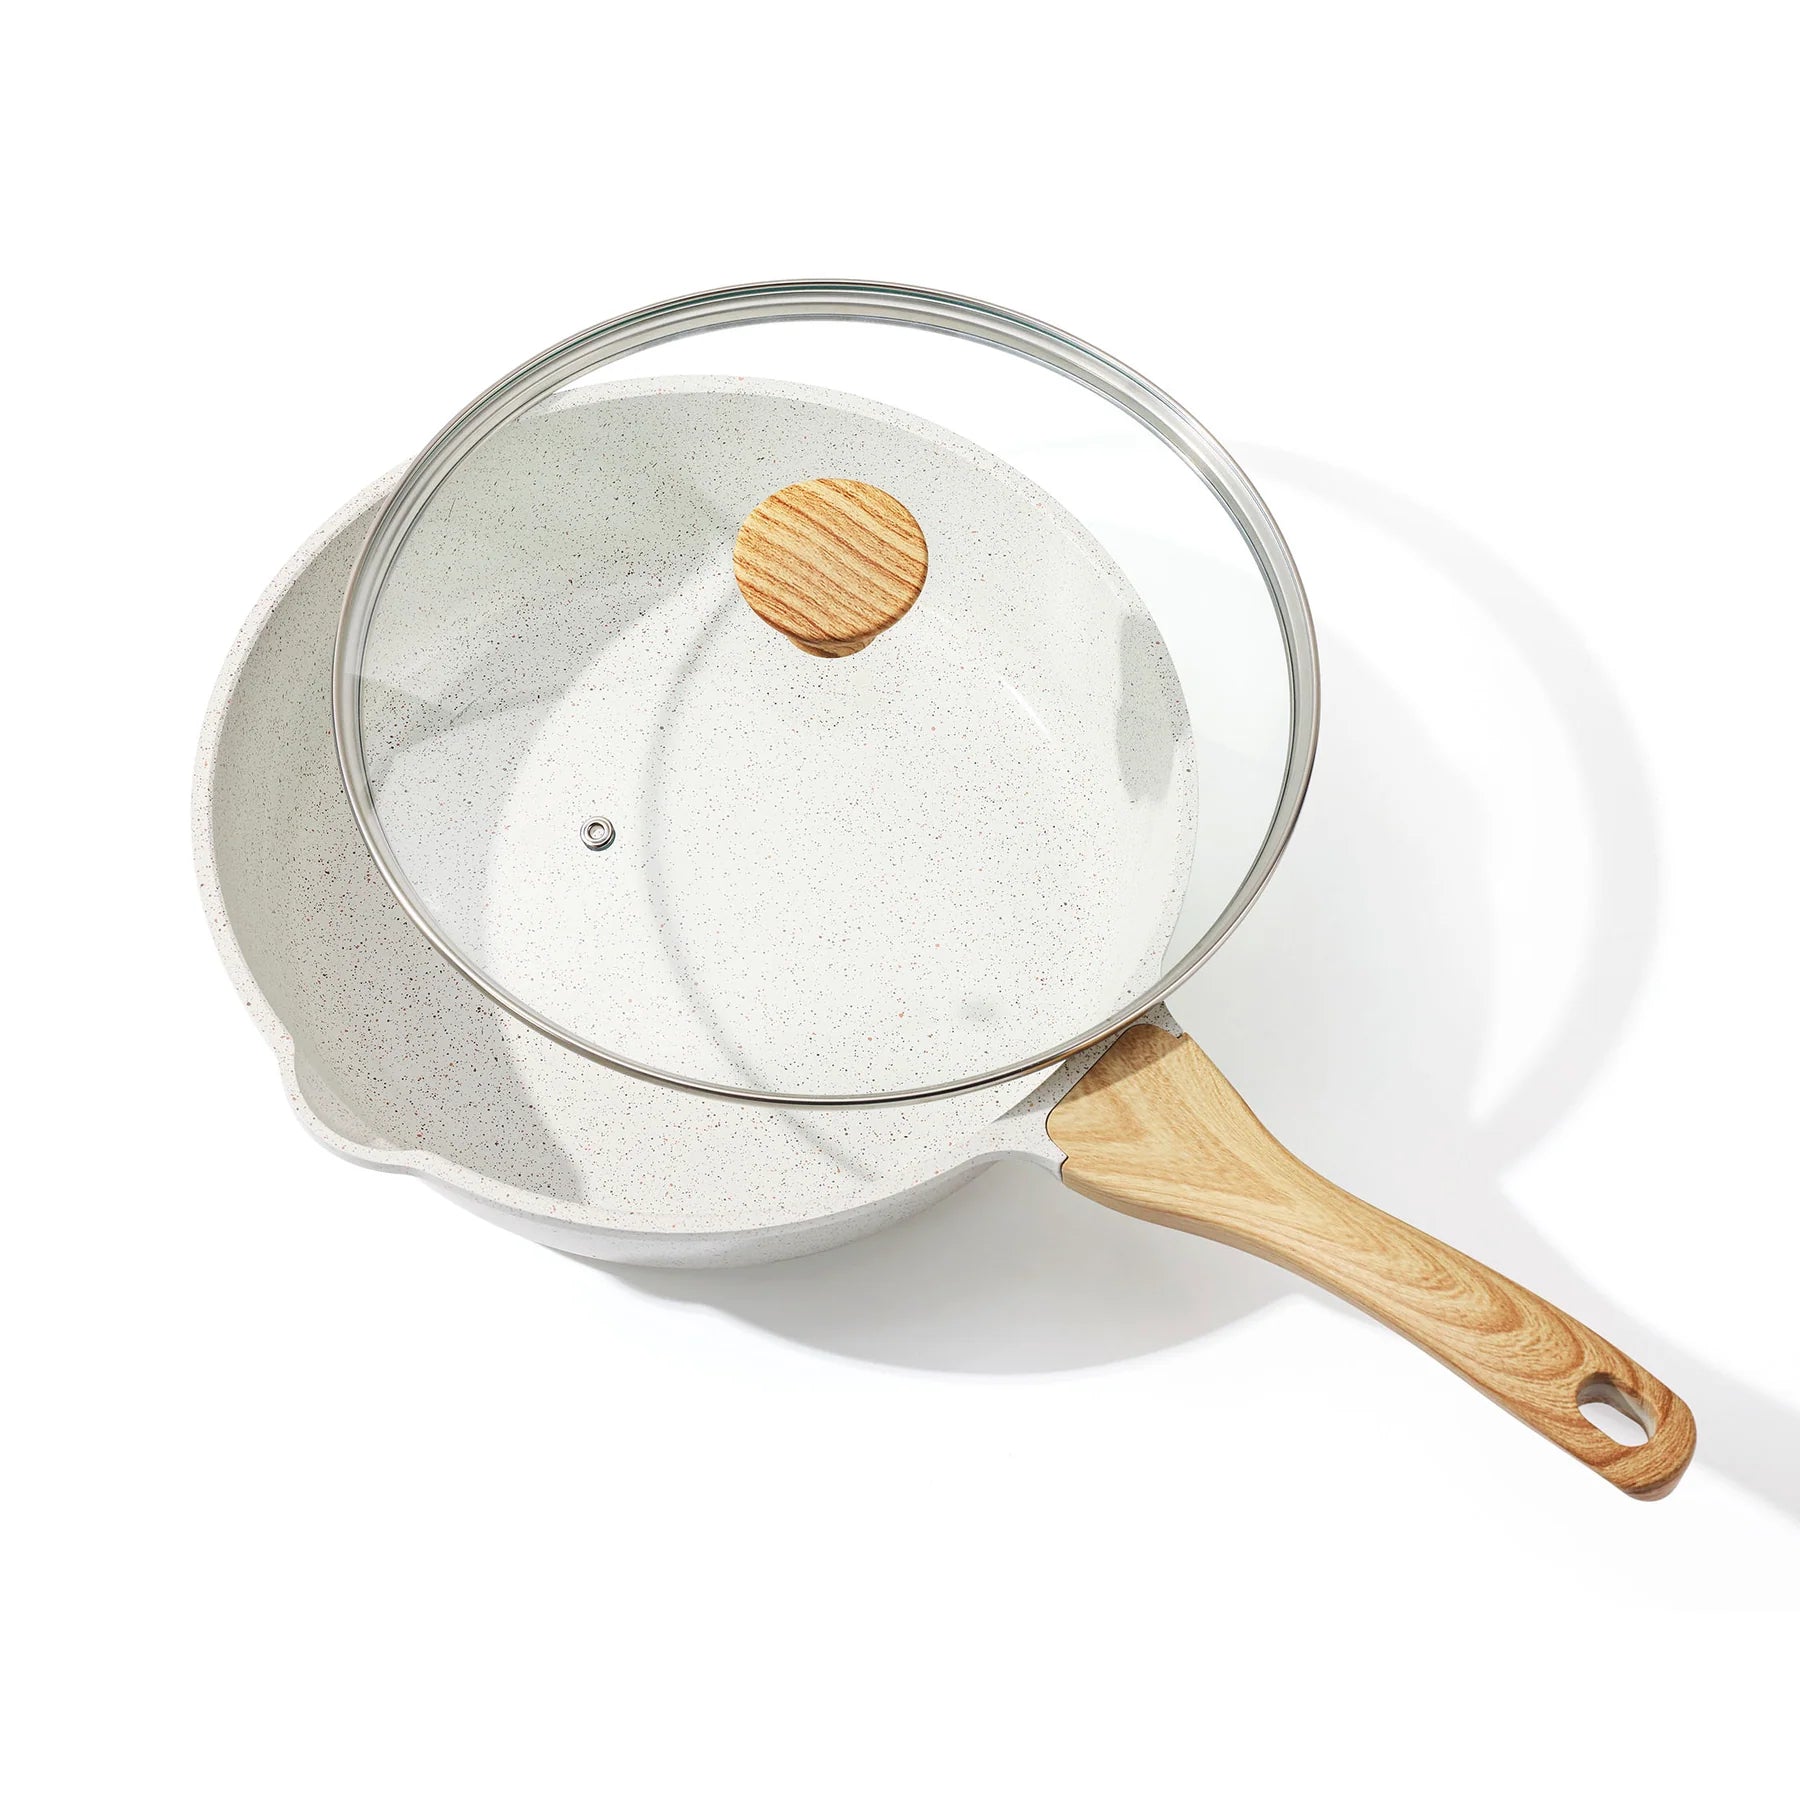 SENSARTE Nonstick Ceramic Cookware Set 13-Piece, Healthy Pots and